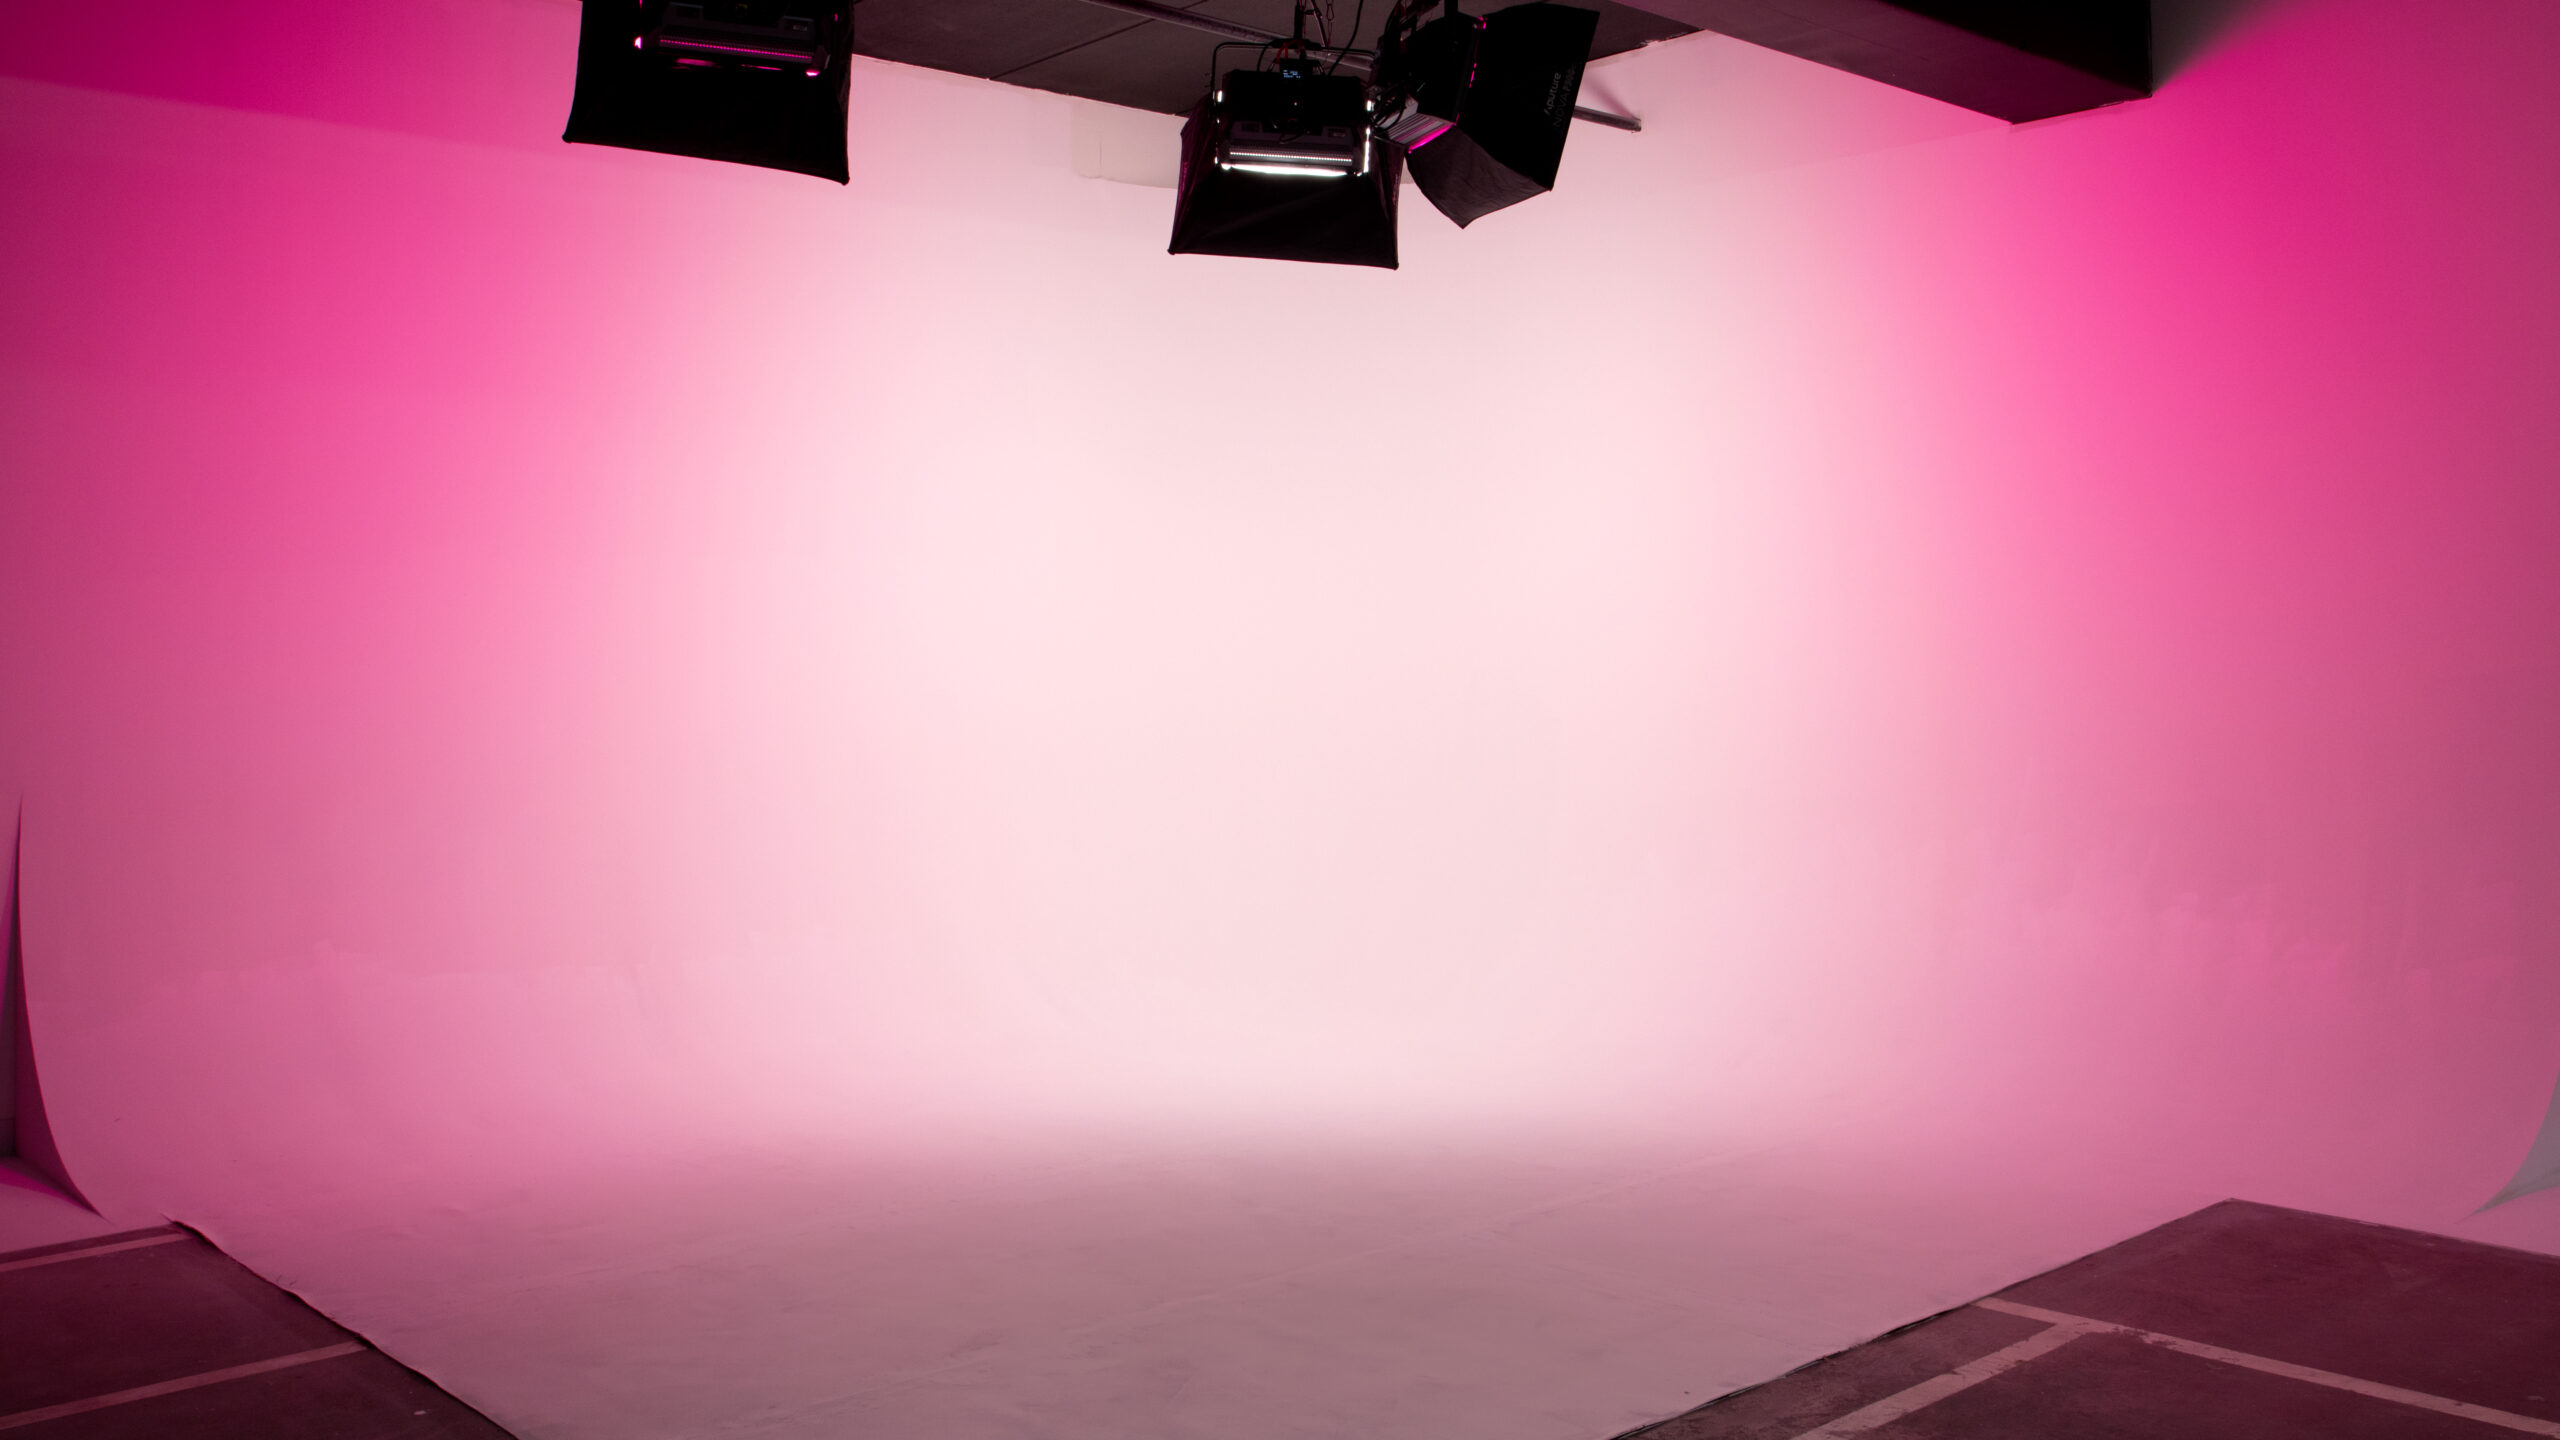 Photo of Cyc Studio, a 15x15 cyclorama cove with pink lights illuminating